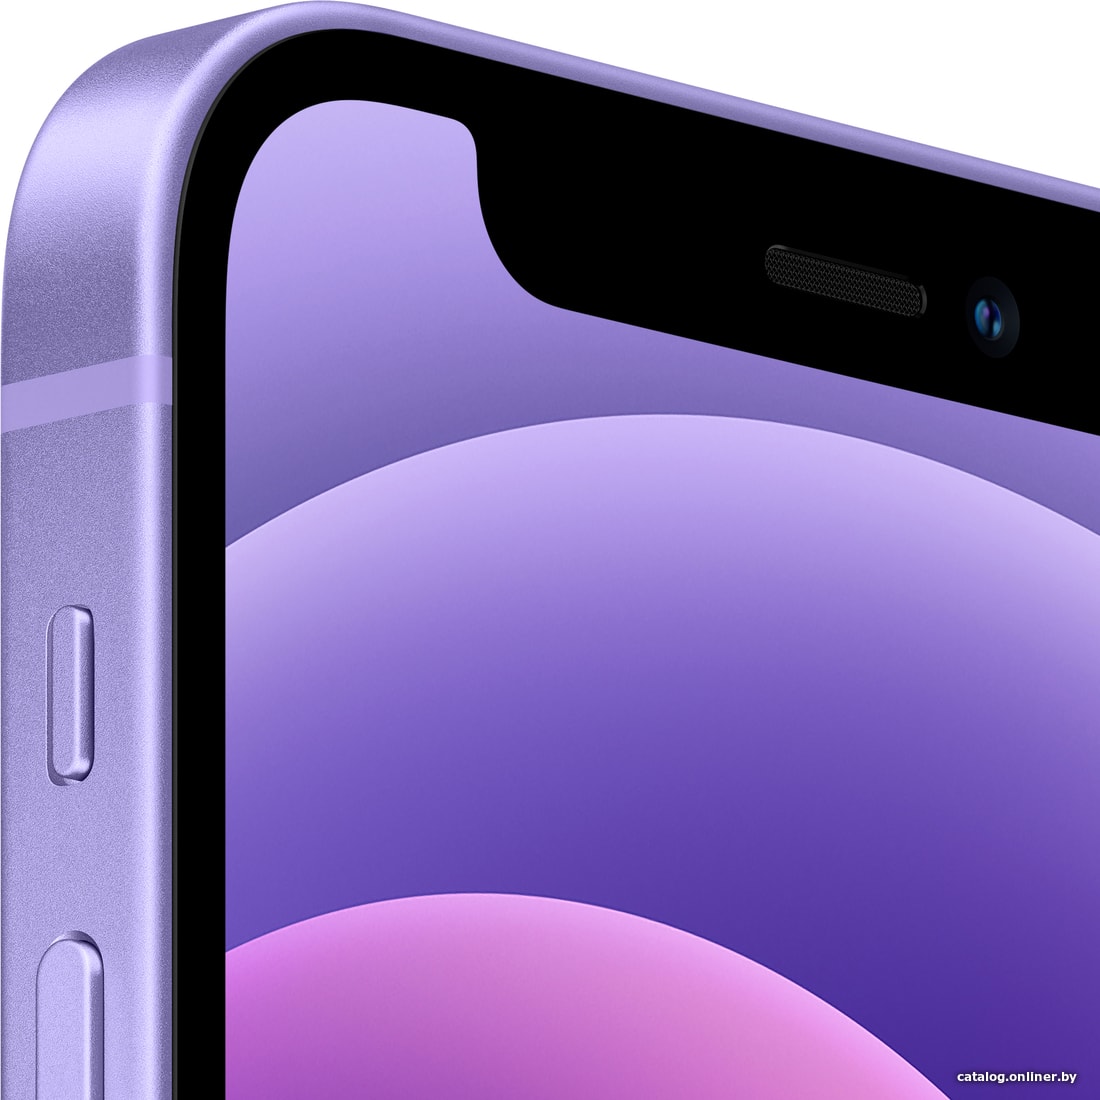 Apple iPhone 12 mini 128GB (фиолетовый) смартфон купить в Минске